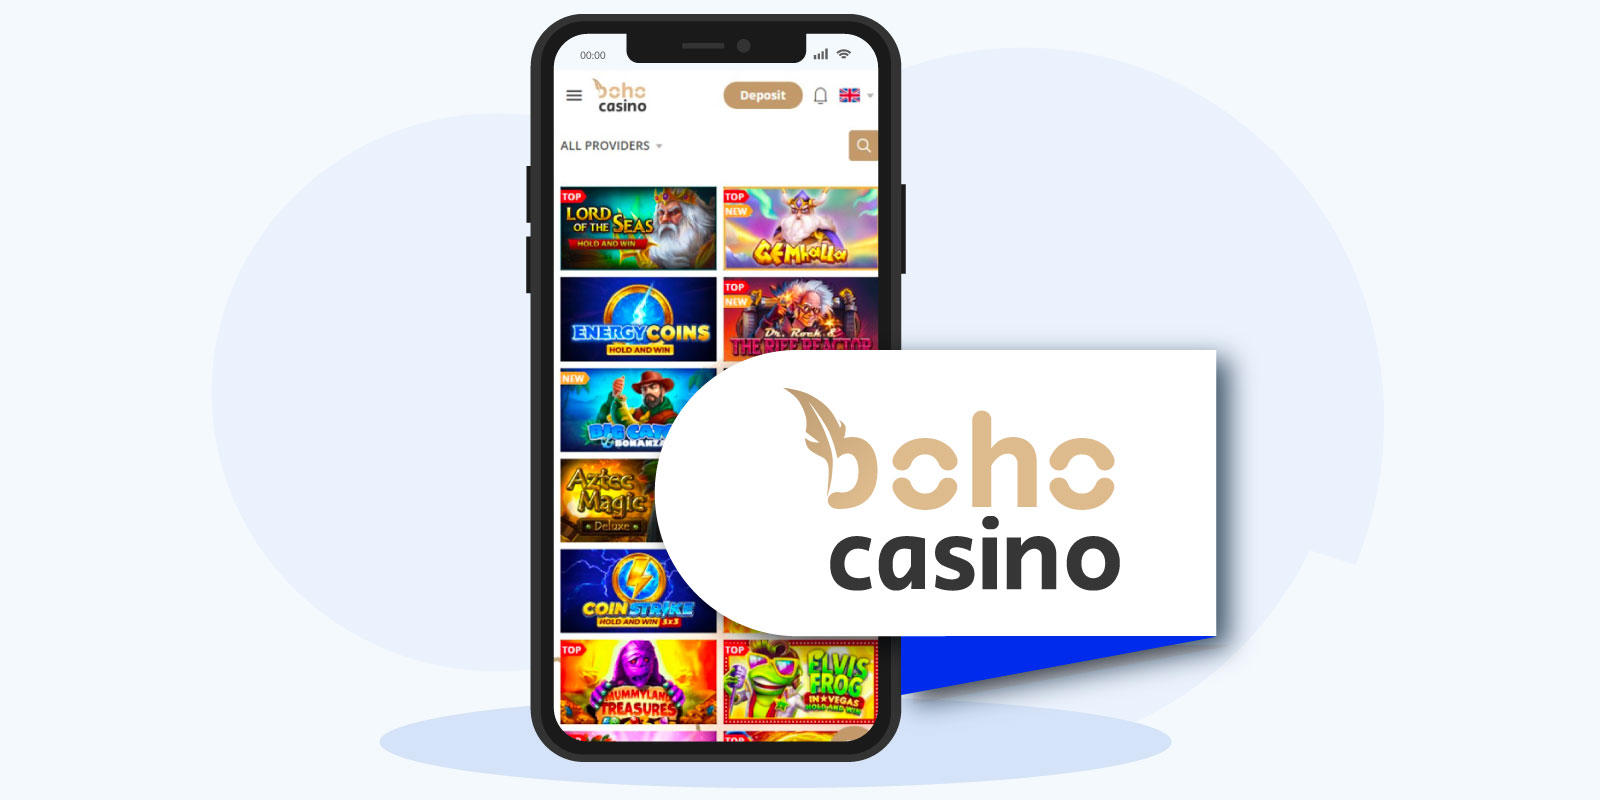 Boho Casino - Best Online Casino for Mobile Gaming in New Zealand